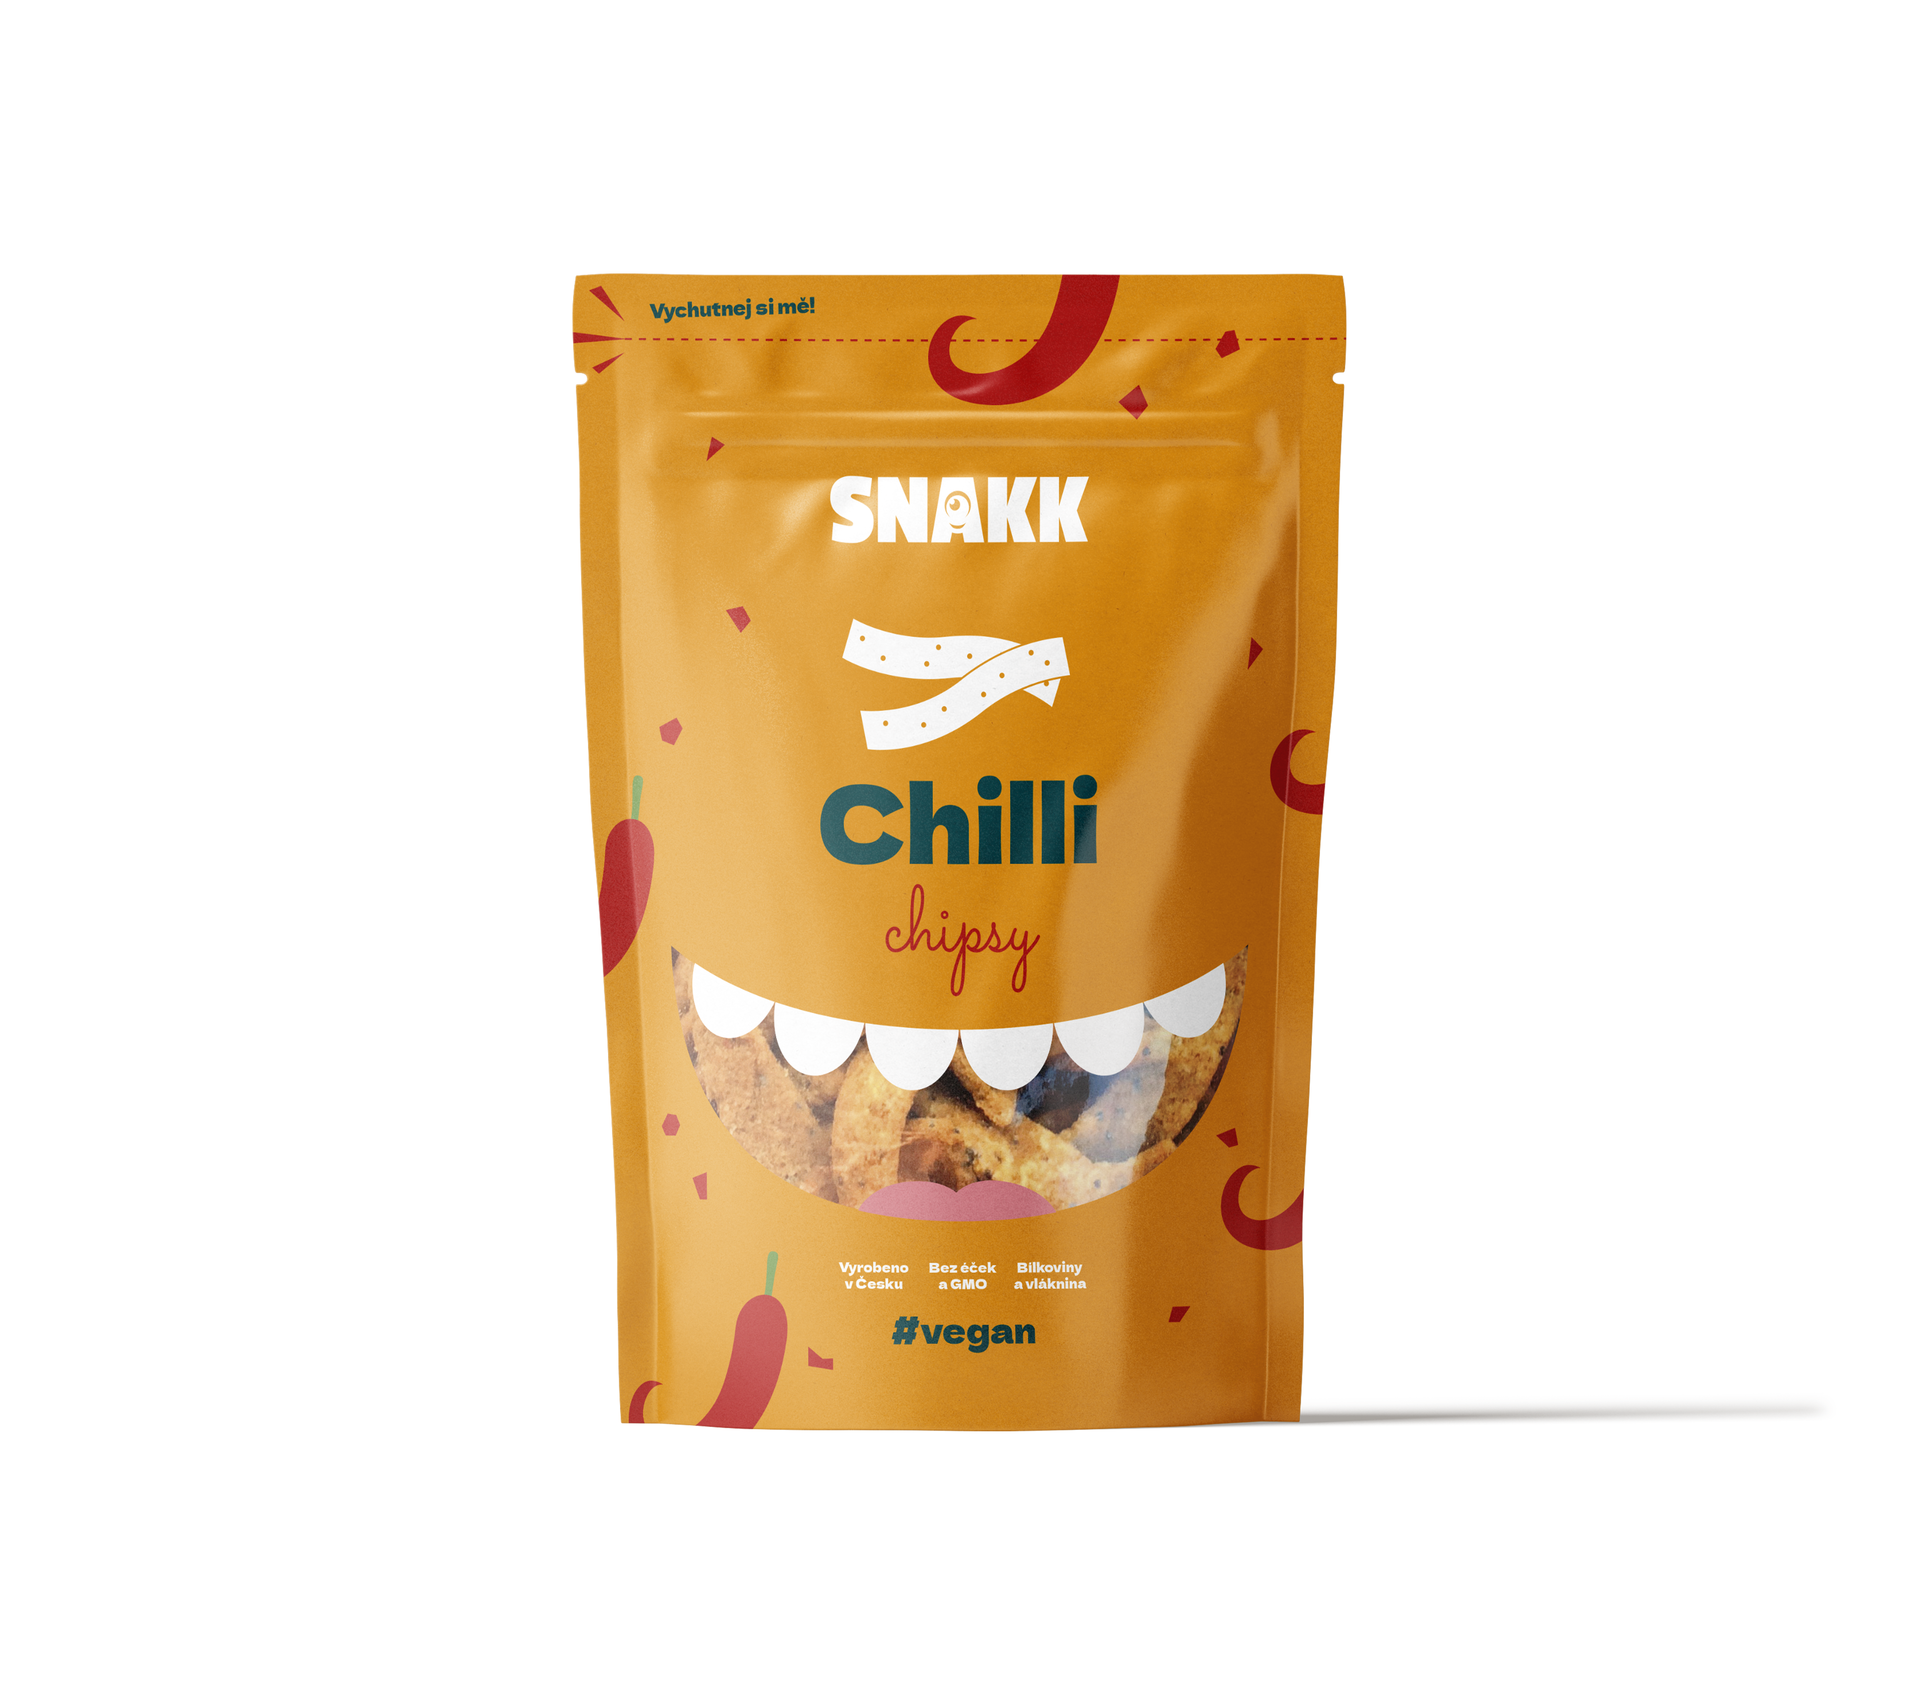 Snakk Chilli chipsy 70 g - expirace